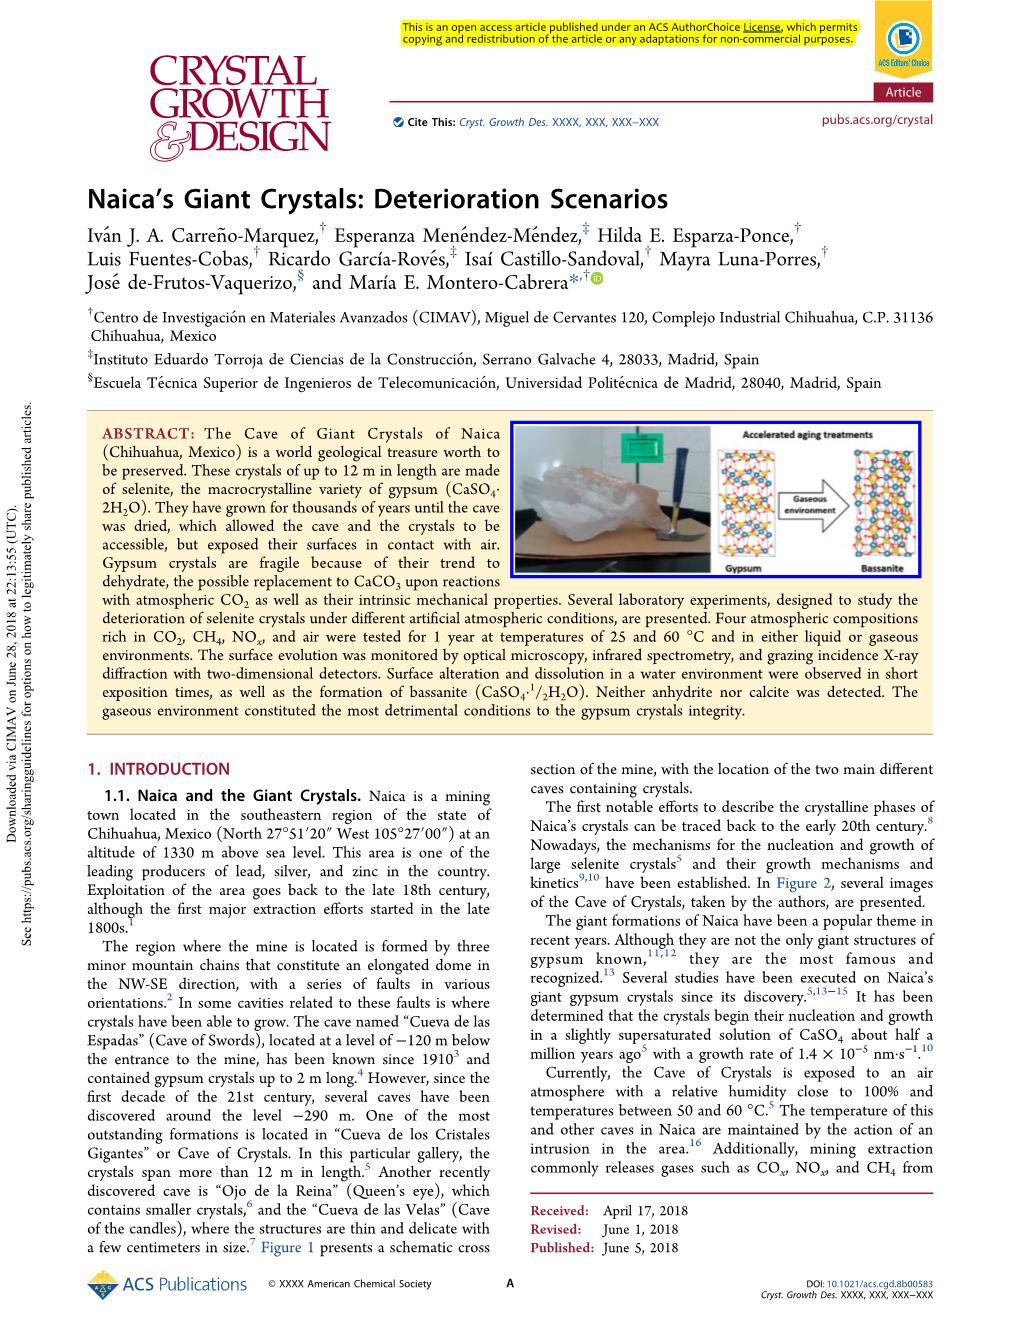 Naica's Giant Crystals: Deterioration Scenarios